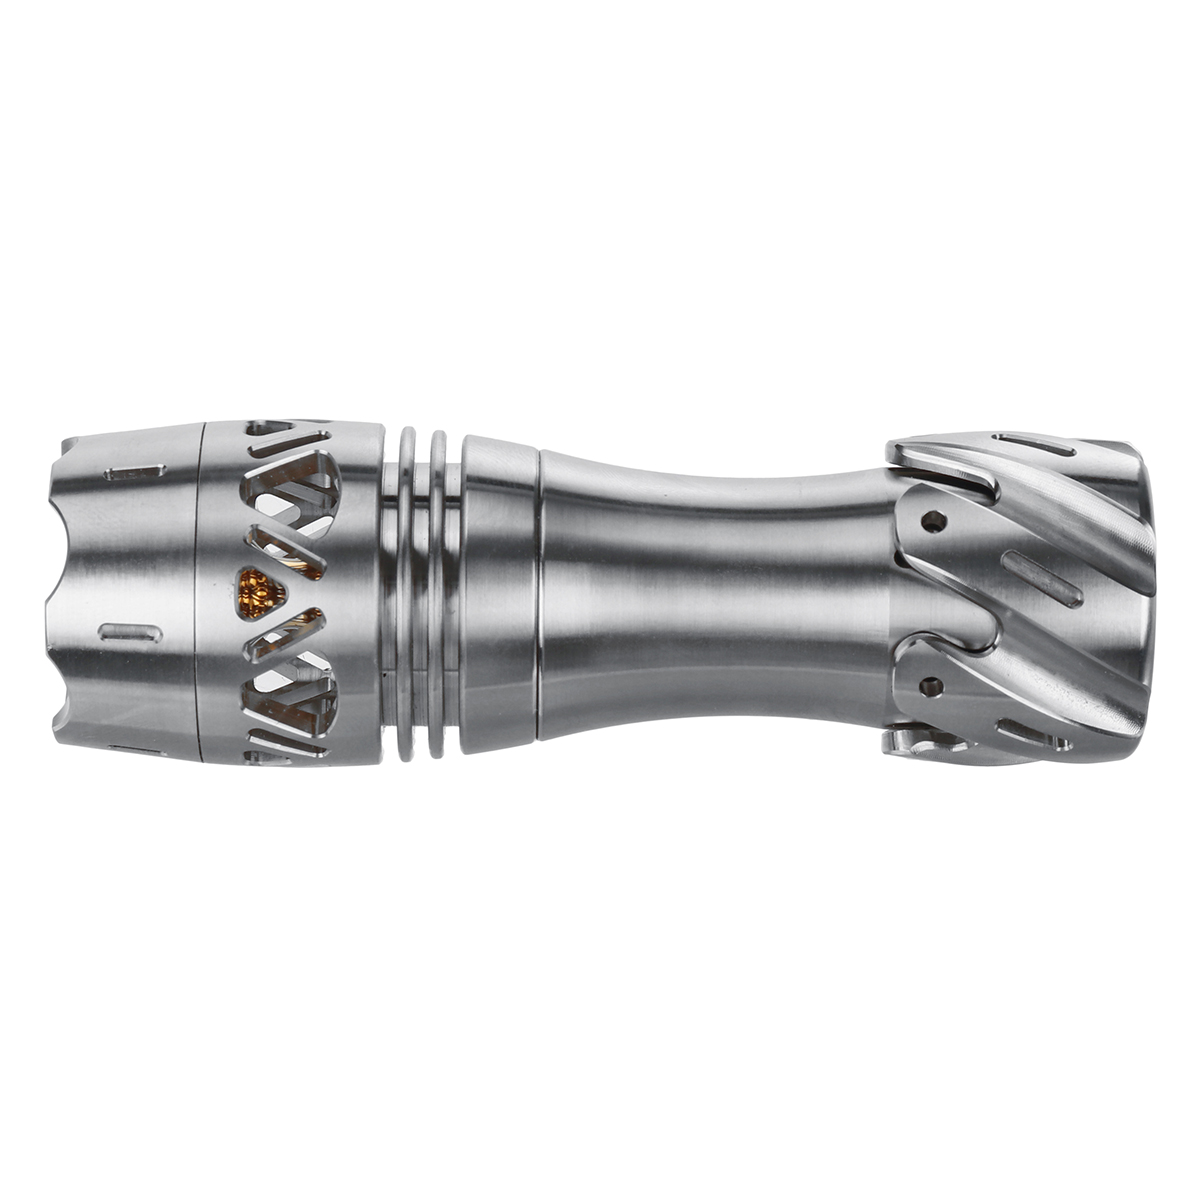 MEOTE-RX1-2100lm-EDC-Titanium-Flashlight-with-Decompression-Tail-Design--AUX-LED-16340-Battery-Mini--1960389-6